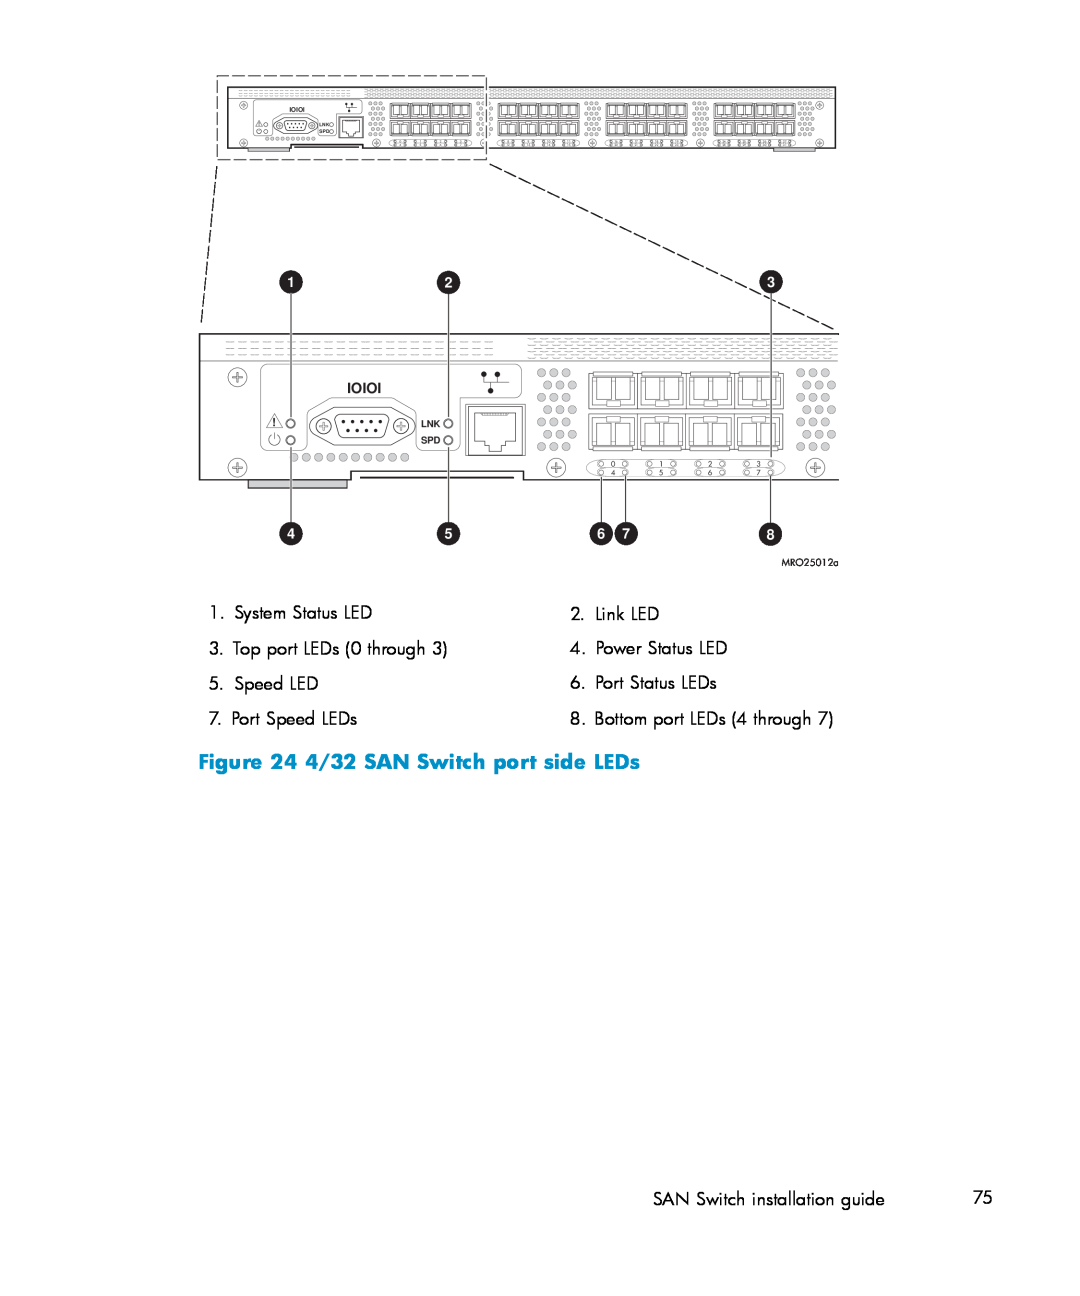 IBM AA-RWF3A-TE manual 4/32 SAN Switch port side LEDs, Bottom port LEDs 4 through, Ioioi, scale 5/16 =, MRO25012a 